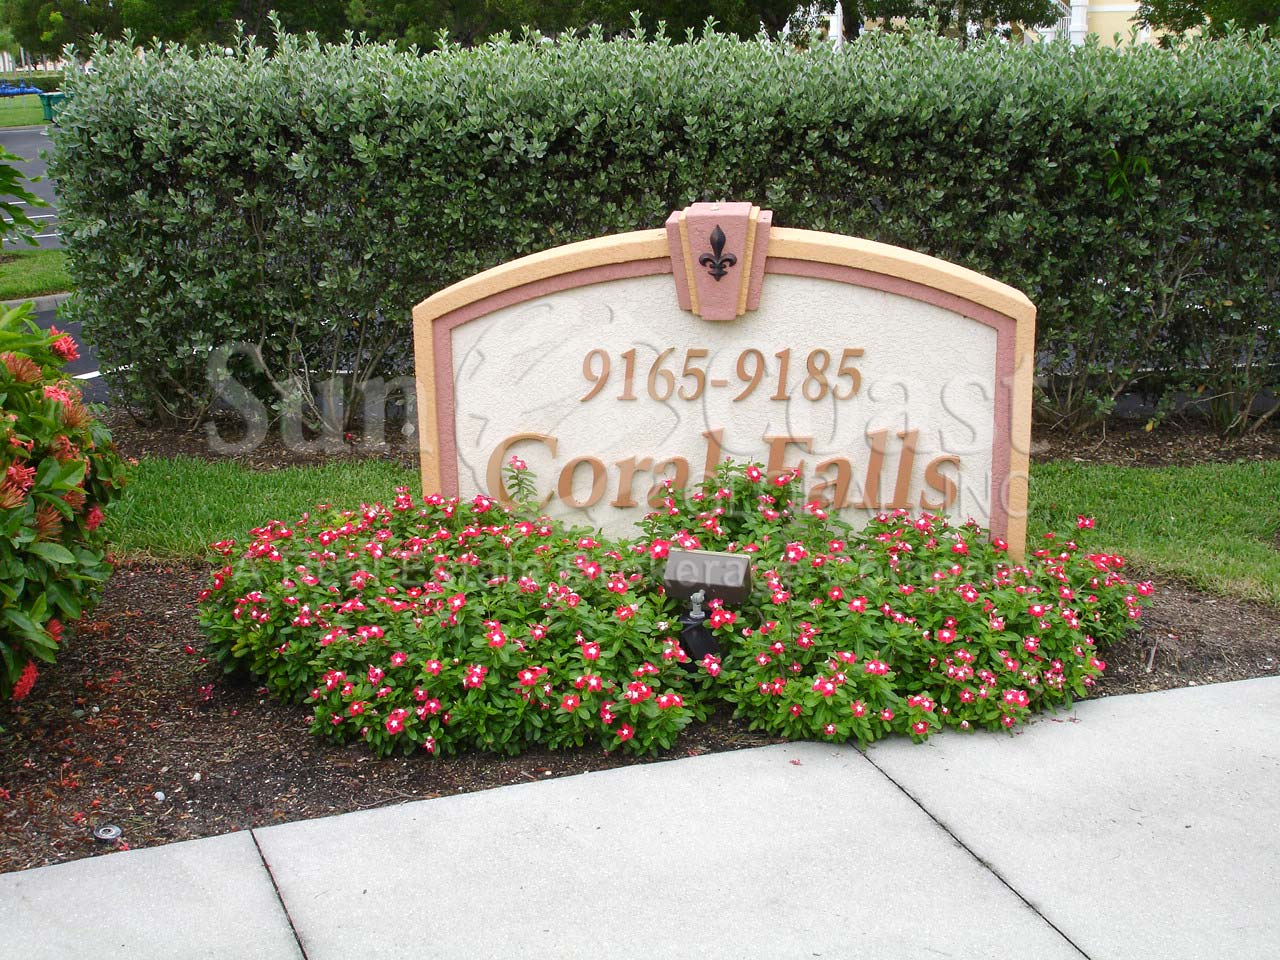 Coral Falls Resort Signage